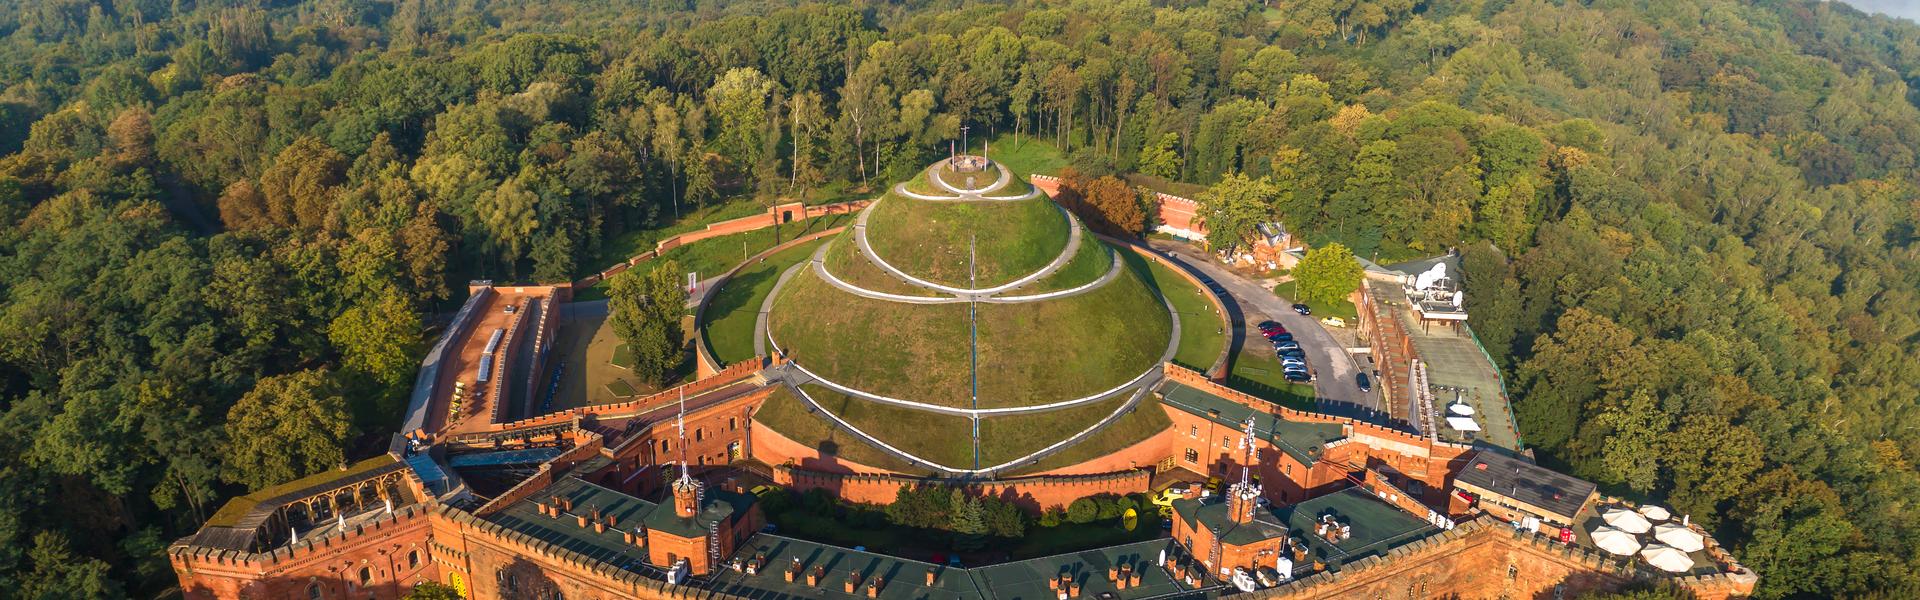 Kościuszko Mound seen from a bird’s eye view